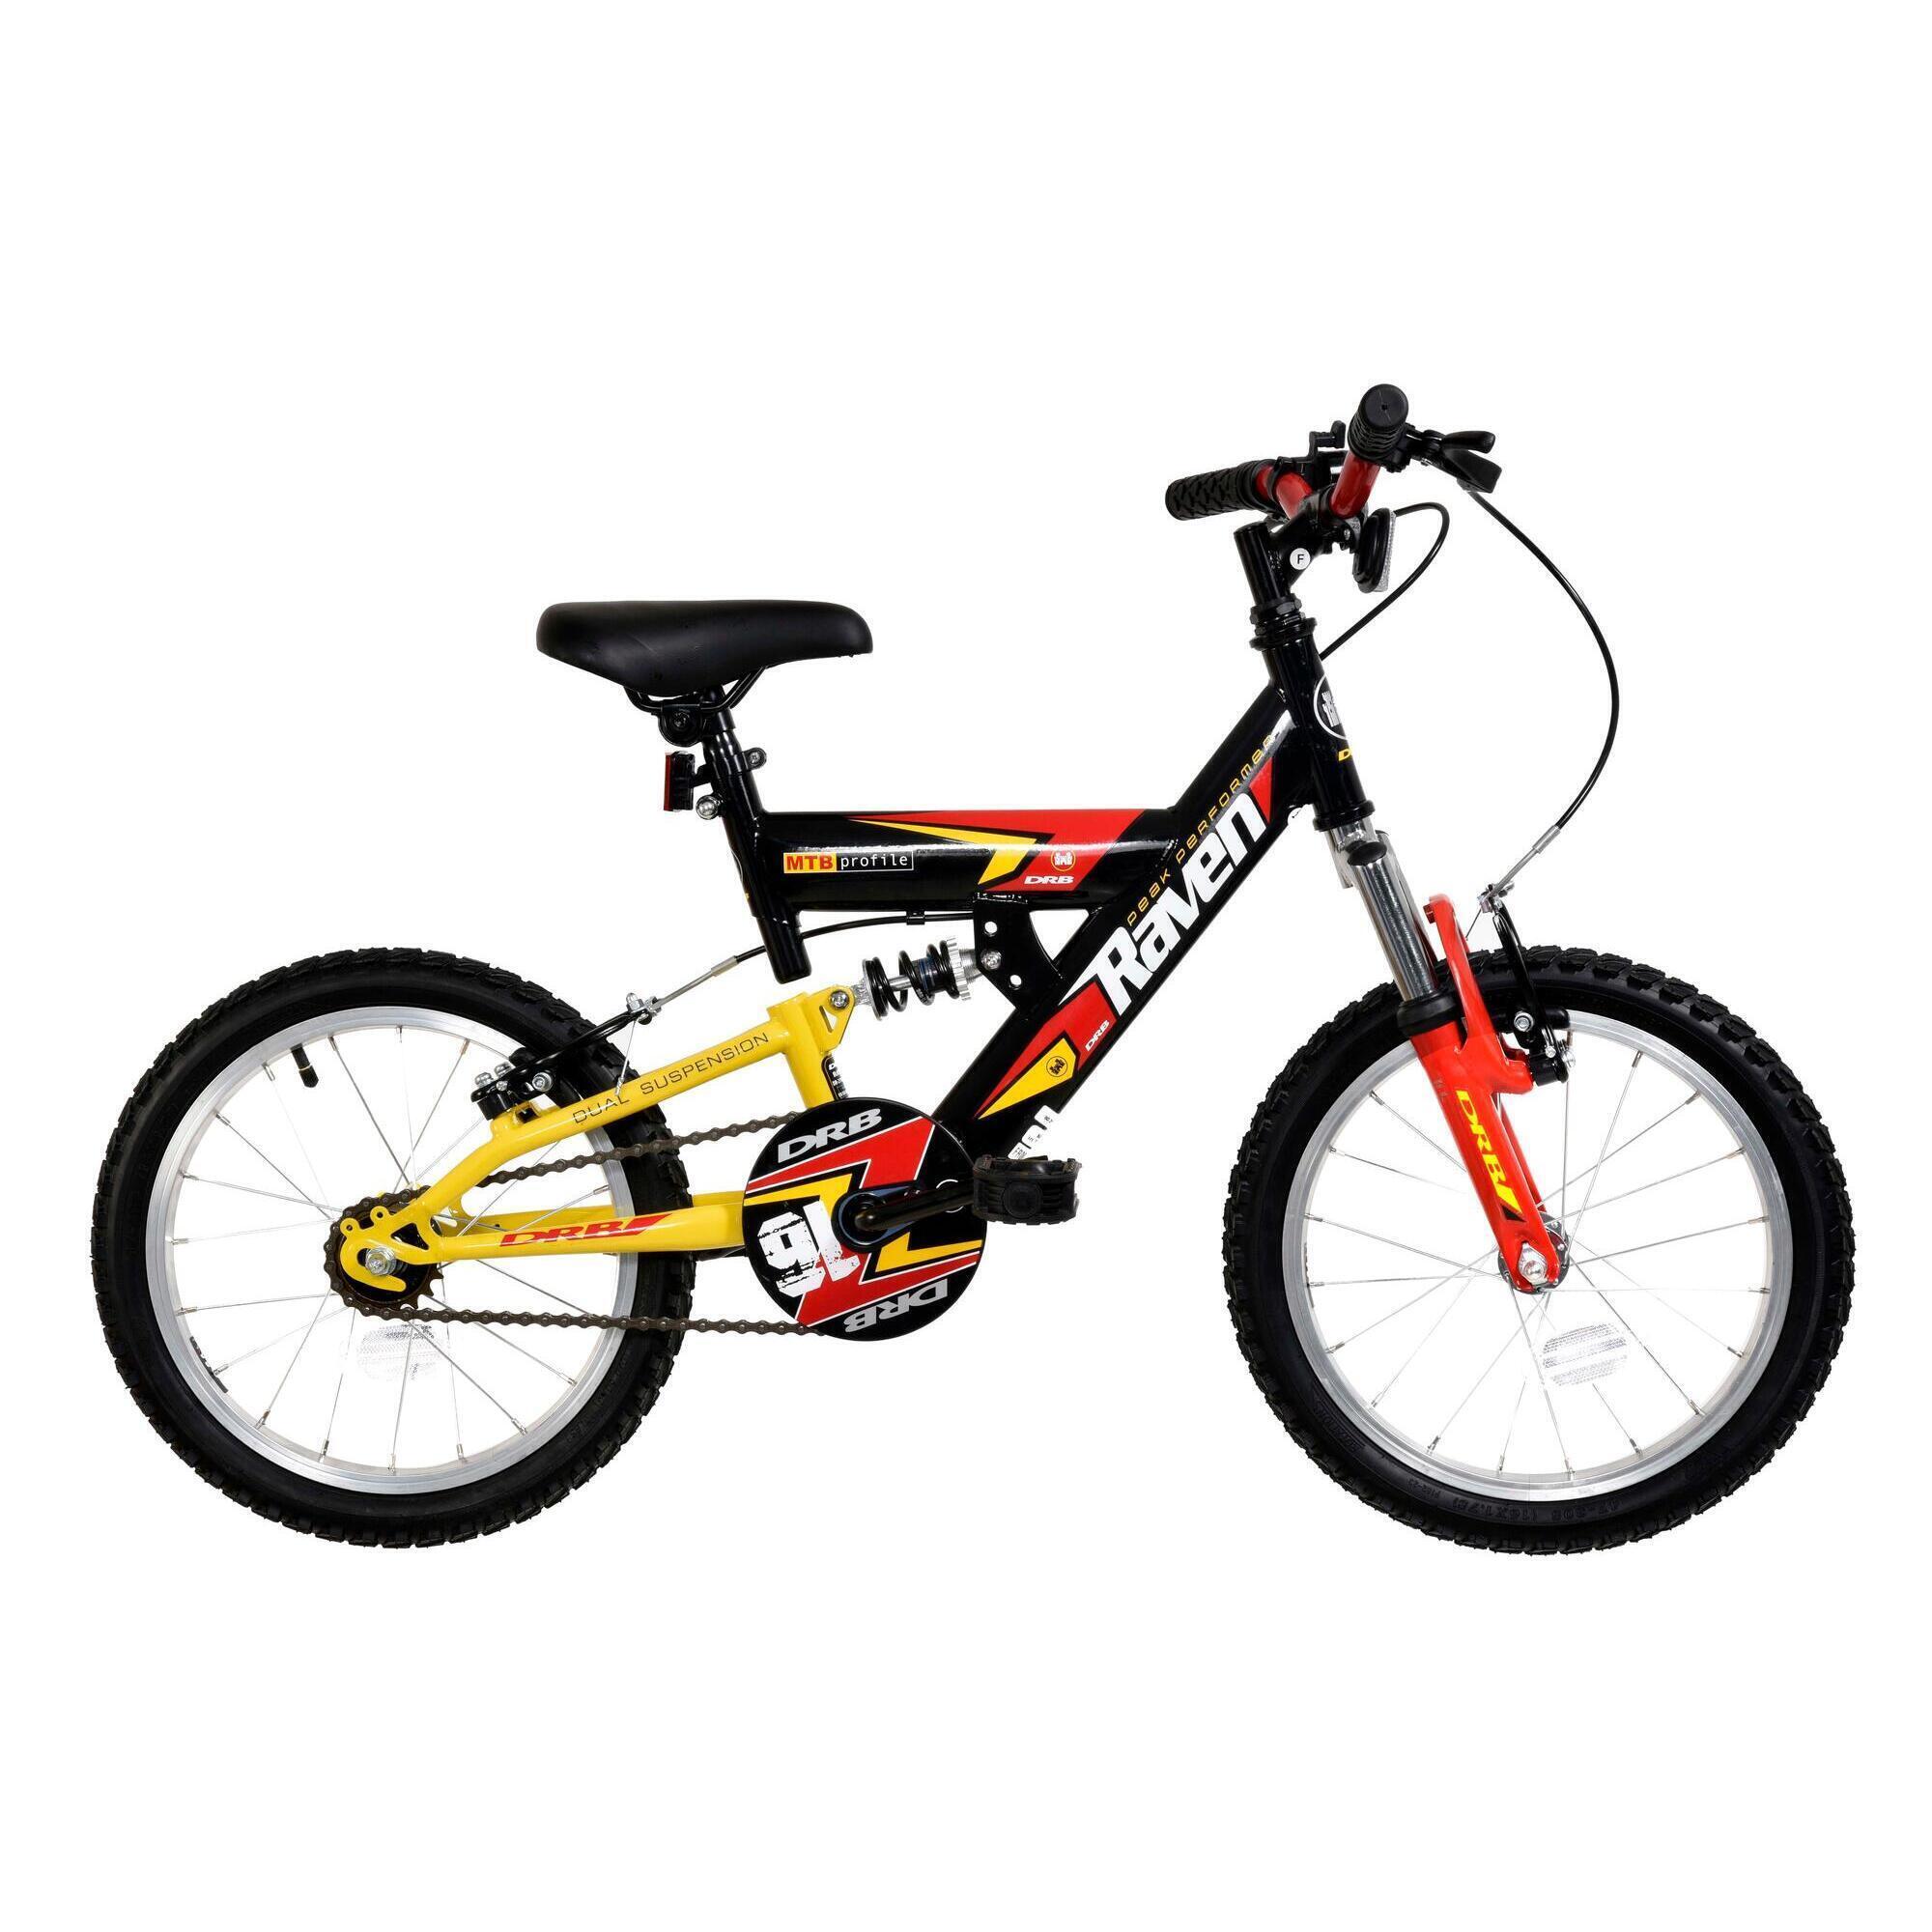 Dallingridge Raven Boys Full Suspension Mountain Bike, 16" Wheel - Black/Yellow/ 1/2